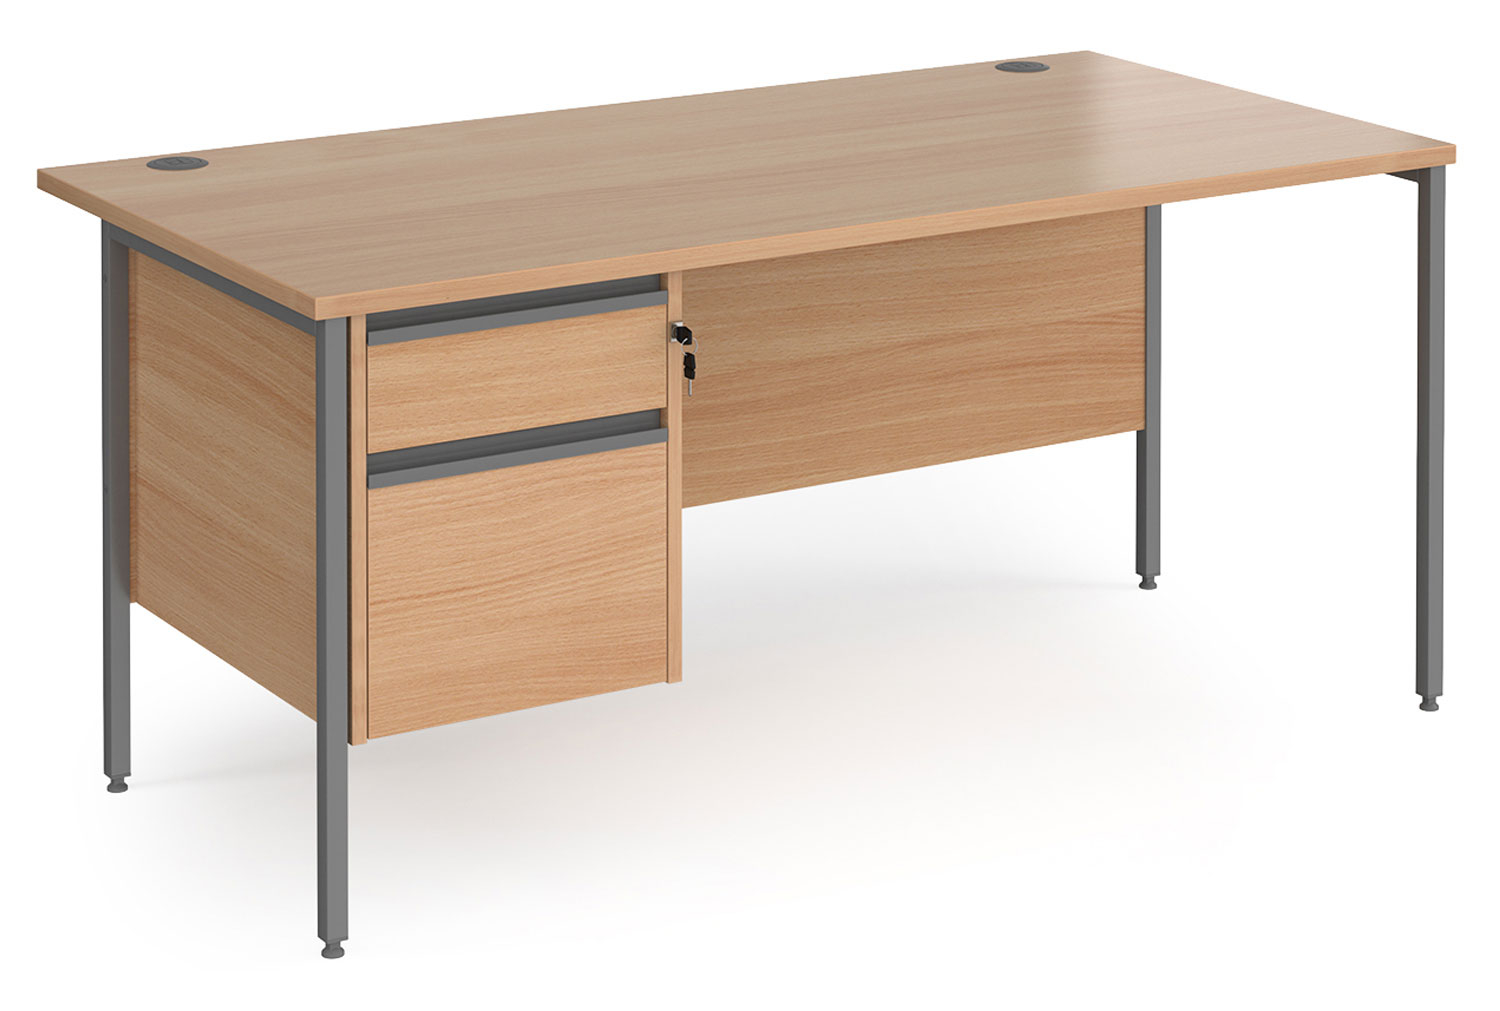 Value Line Classic+ Rectangular H-Leg Office Desk 2 Drawers (Graphite Leg), 160wx80dx73h (cm), Beech, Express Delivery